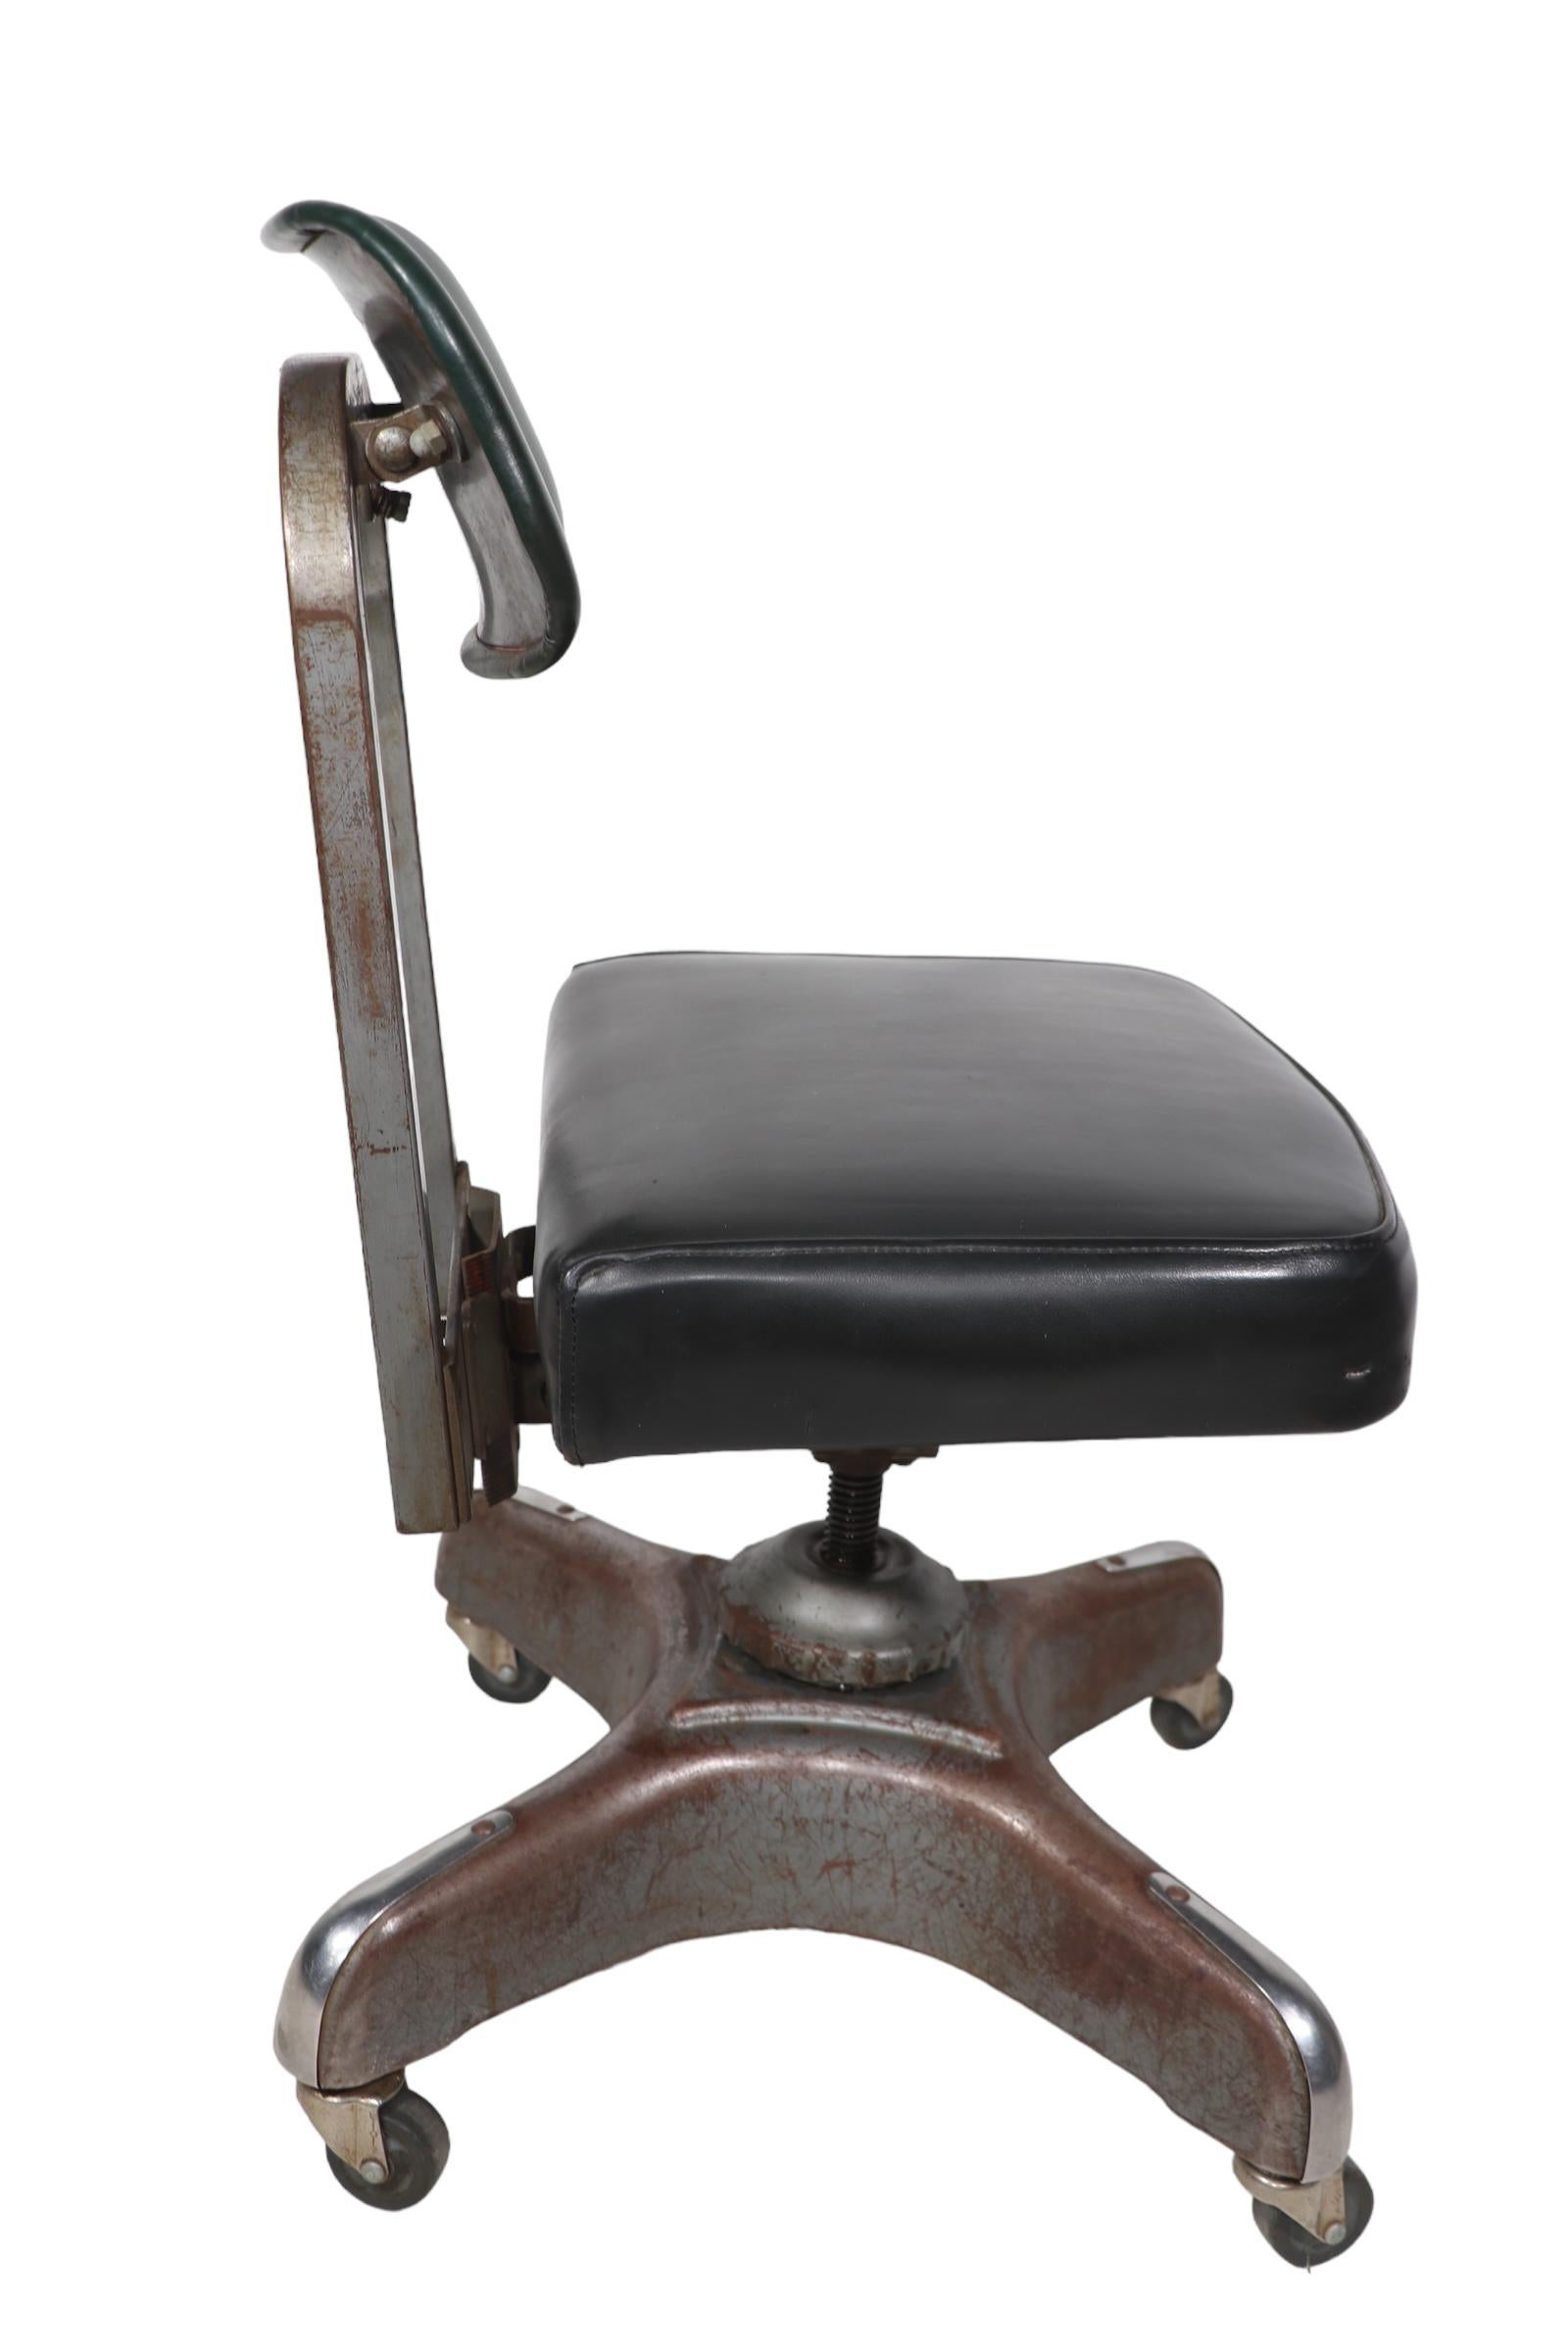 Art Deco Industrial Swivel Tilt Armless Desk Chair by Harter Corporation 1930/40 For Sale 5